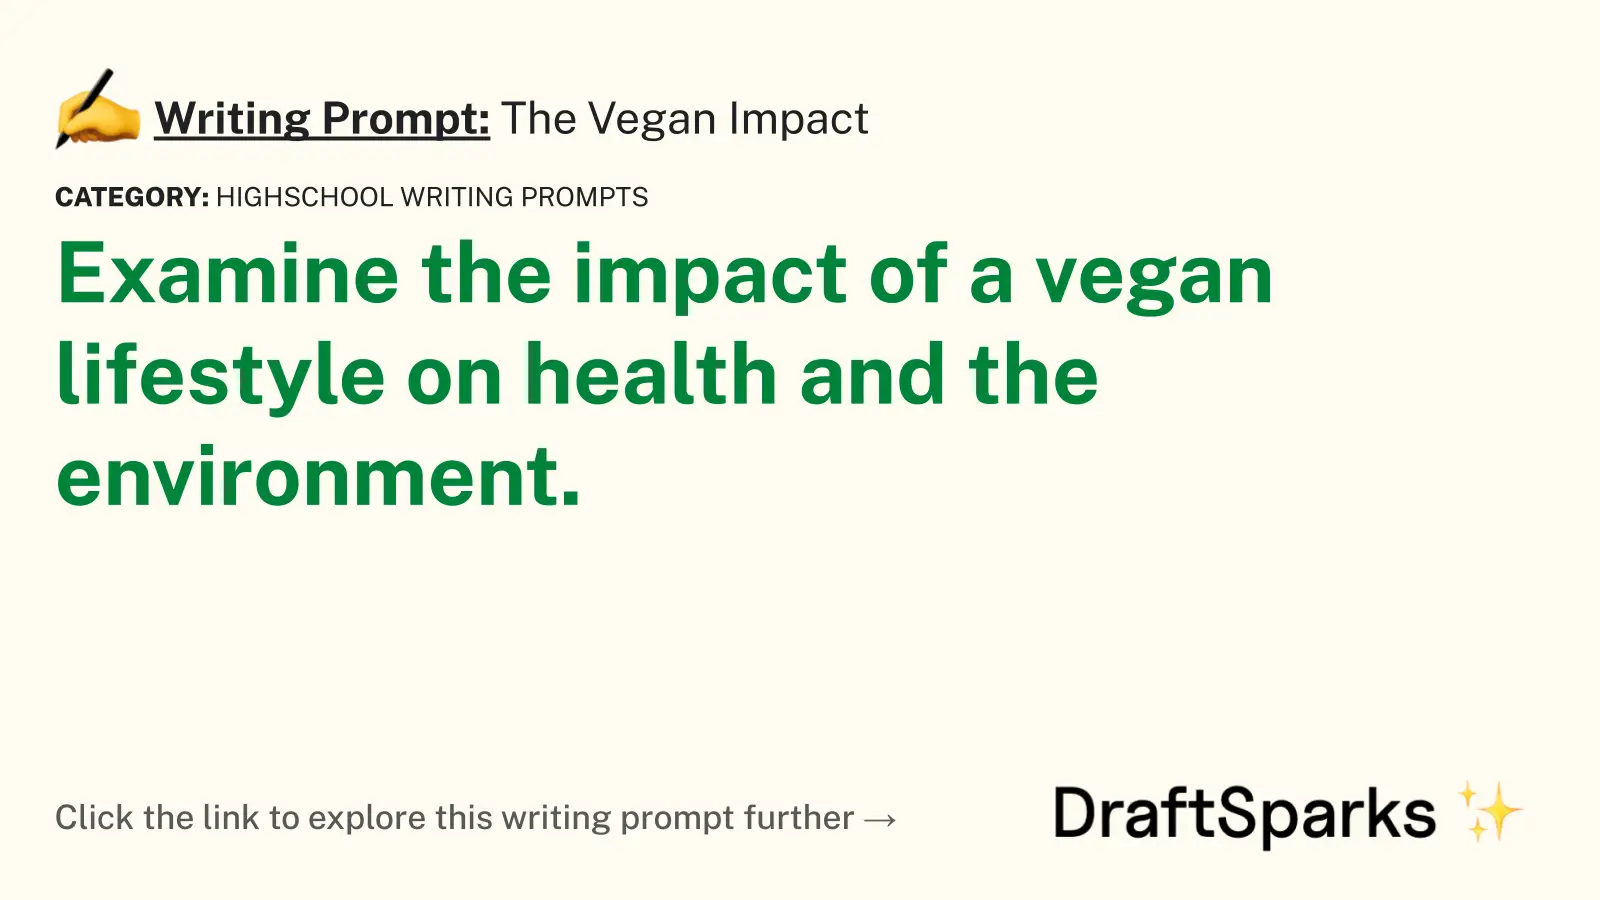 The Vegan Impact